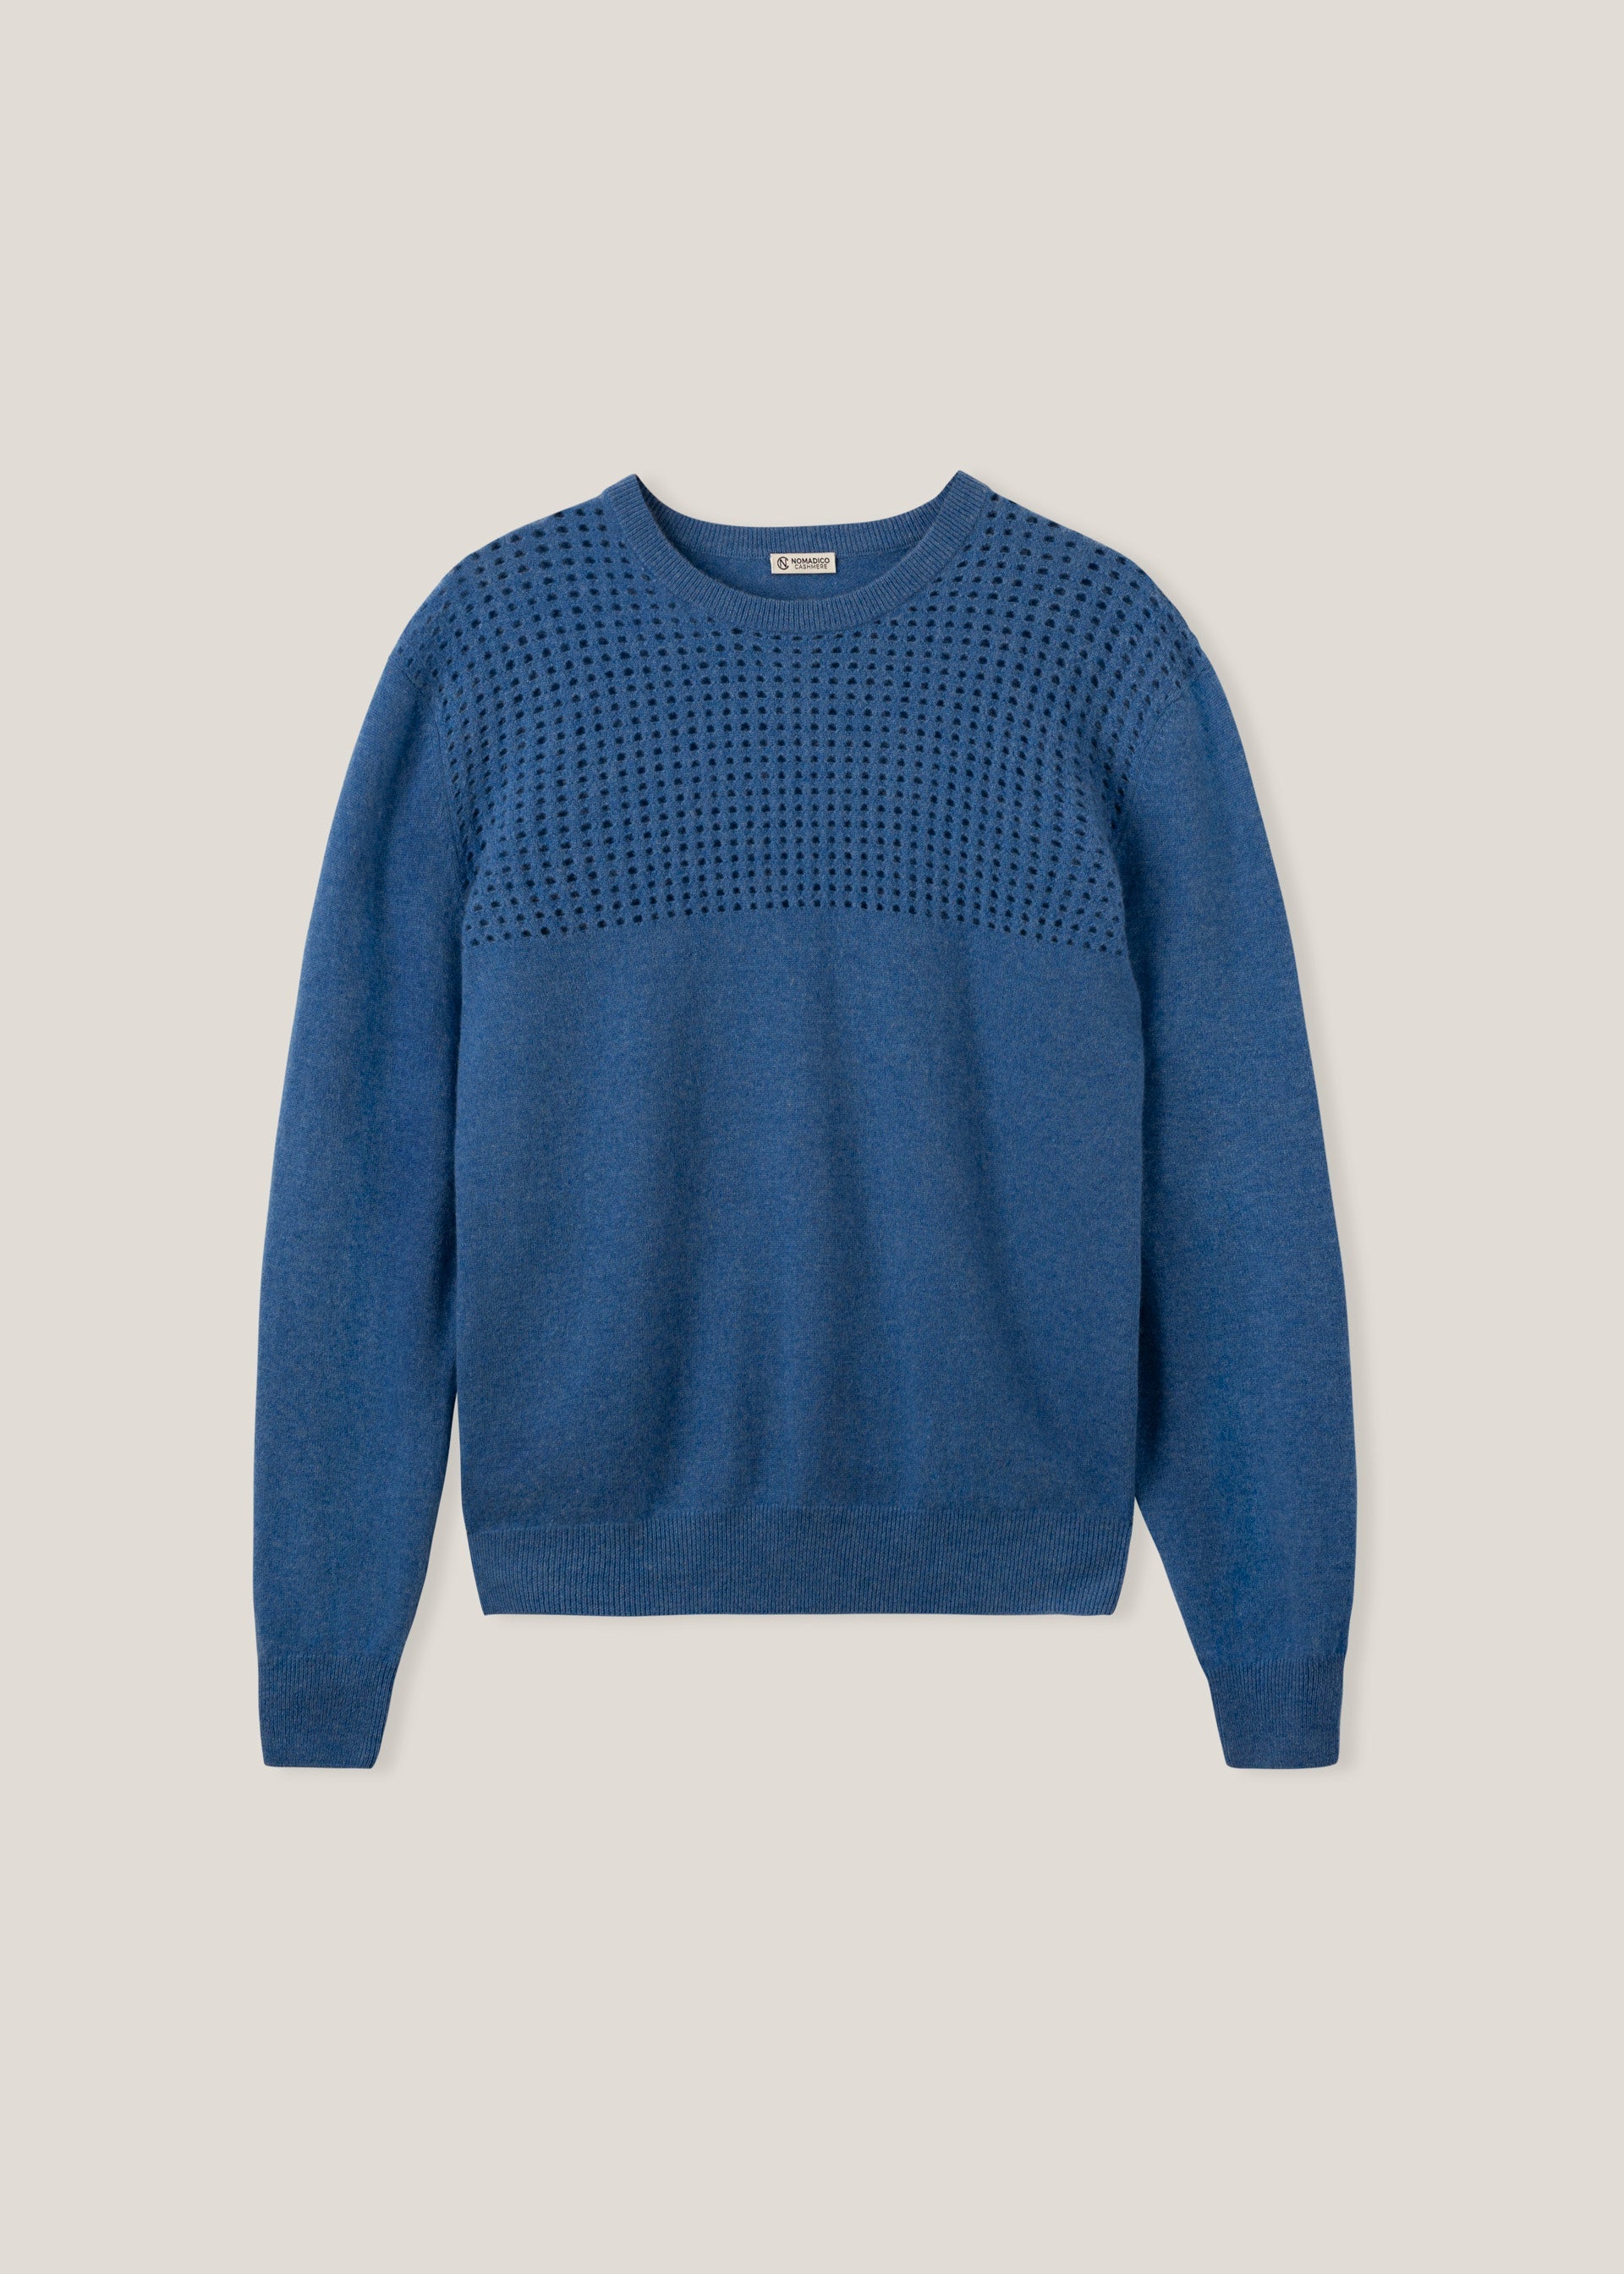 Daisy Jacquard Knit Sweater Grey Melange KNIT000411 – NOMAD